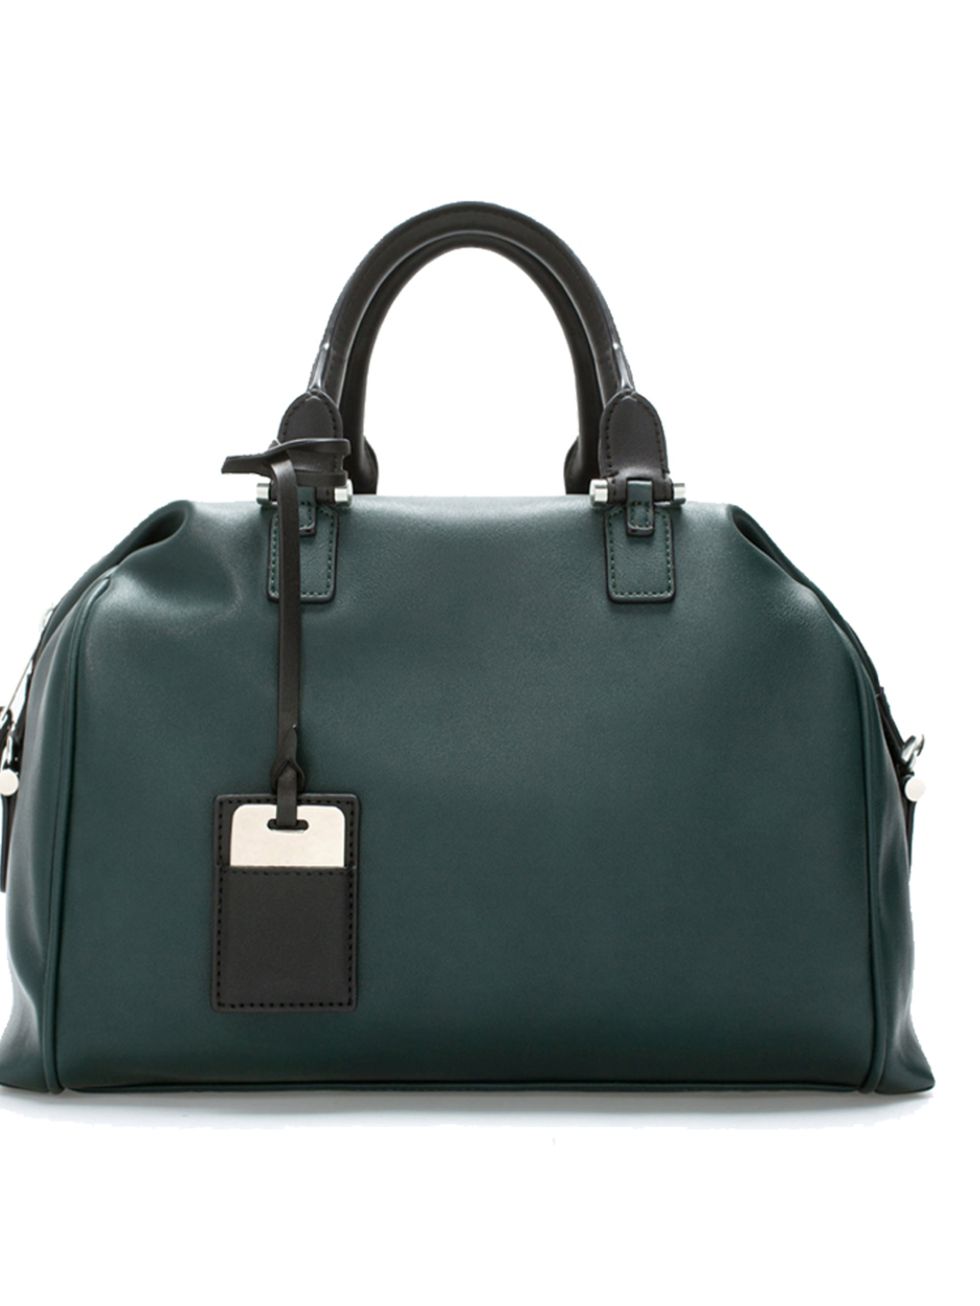 <p>Bowler bag, £49.99 by <a href="http://www.zara.com/uk/en/woman/handbags/soft-bowling-bag-c269200p2172603.html">Zara</a>.</p>